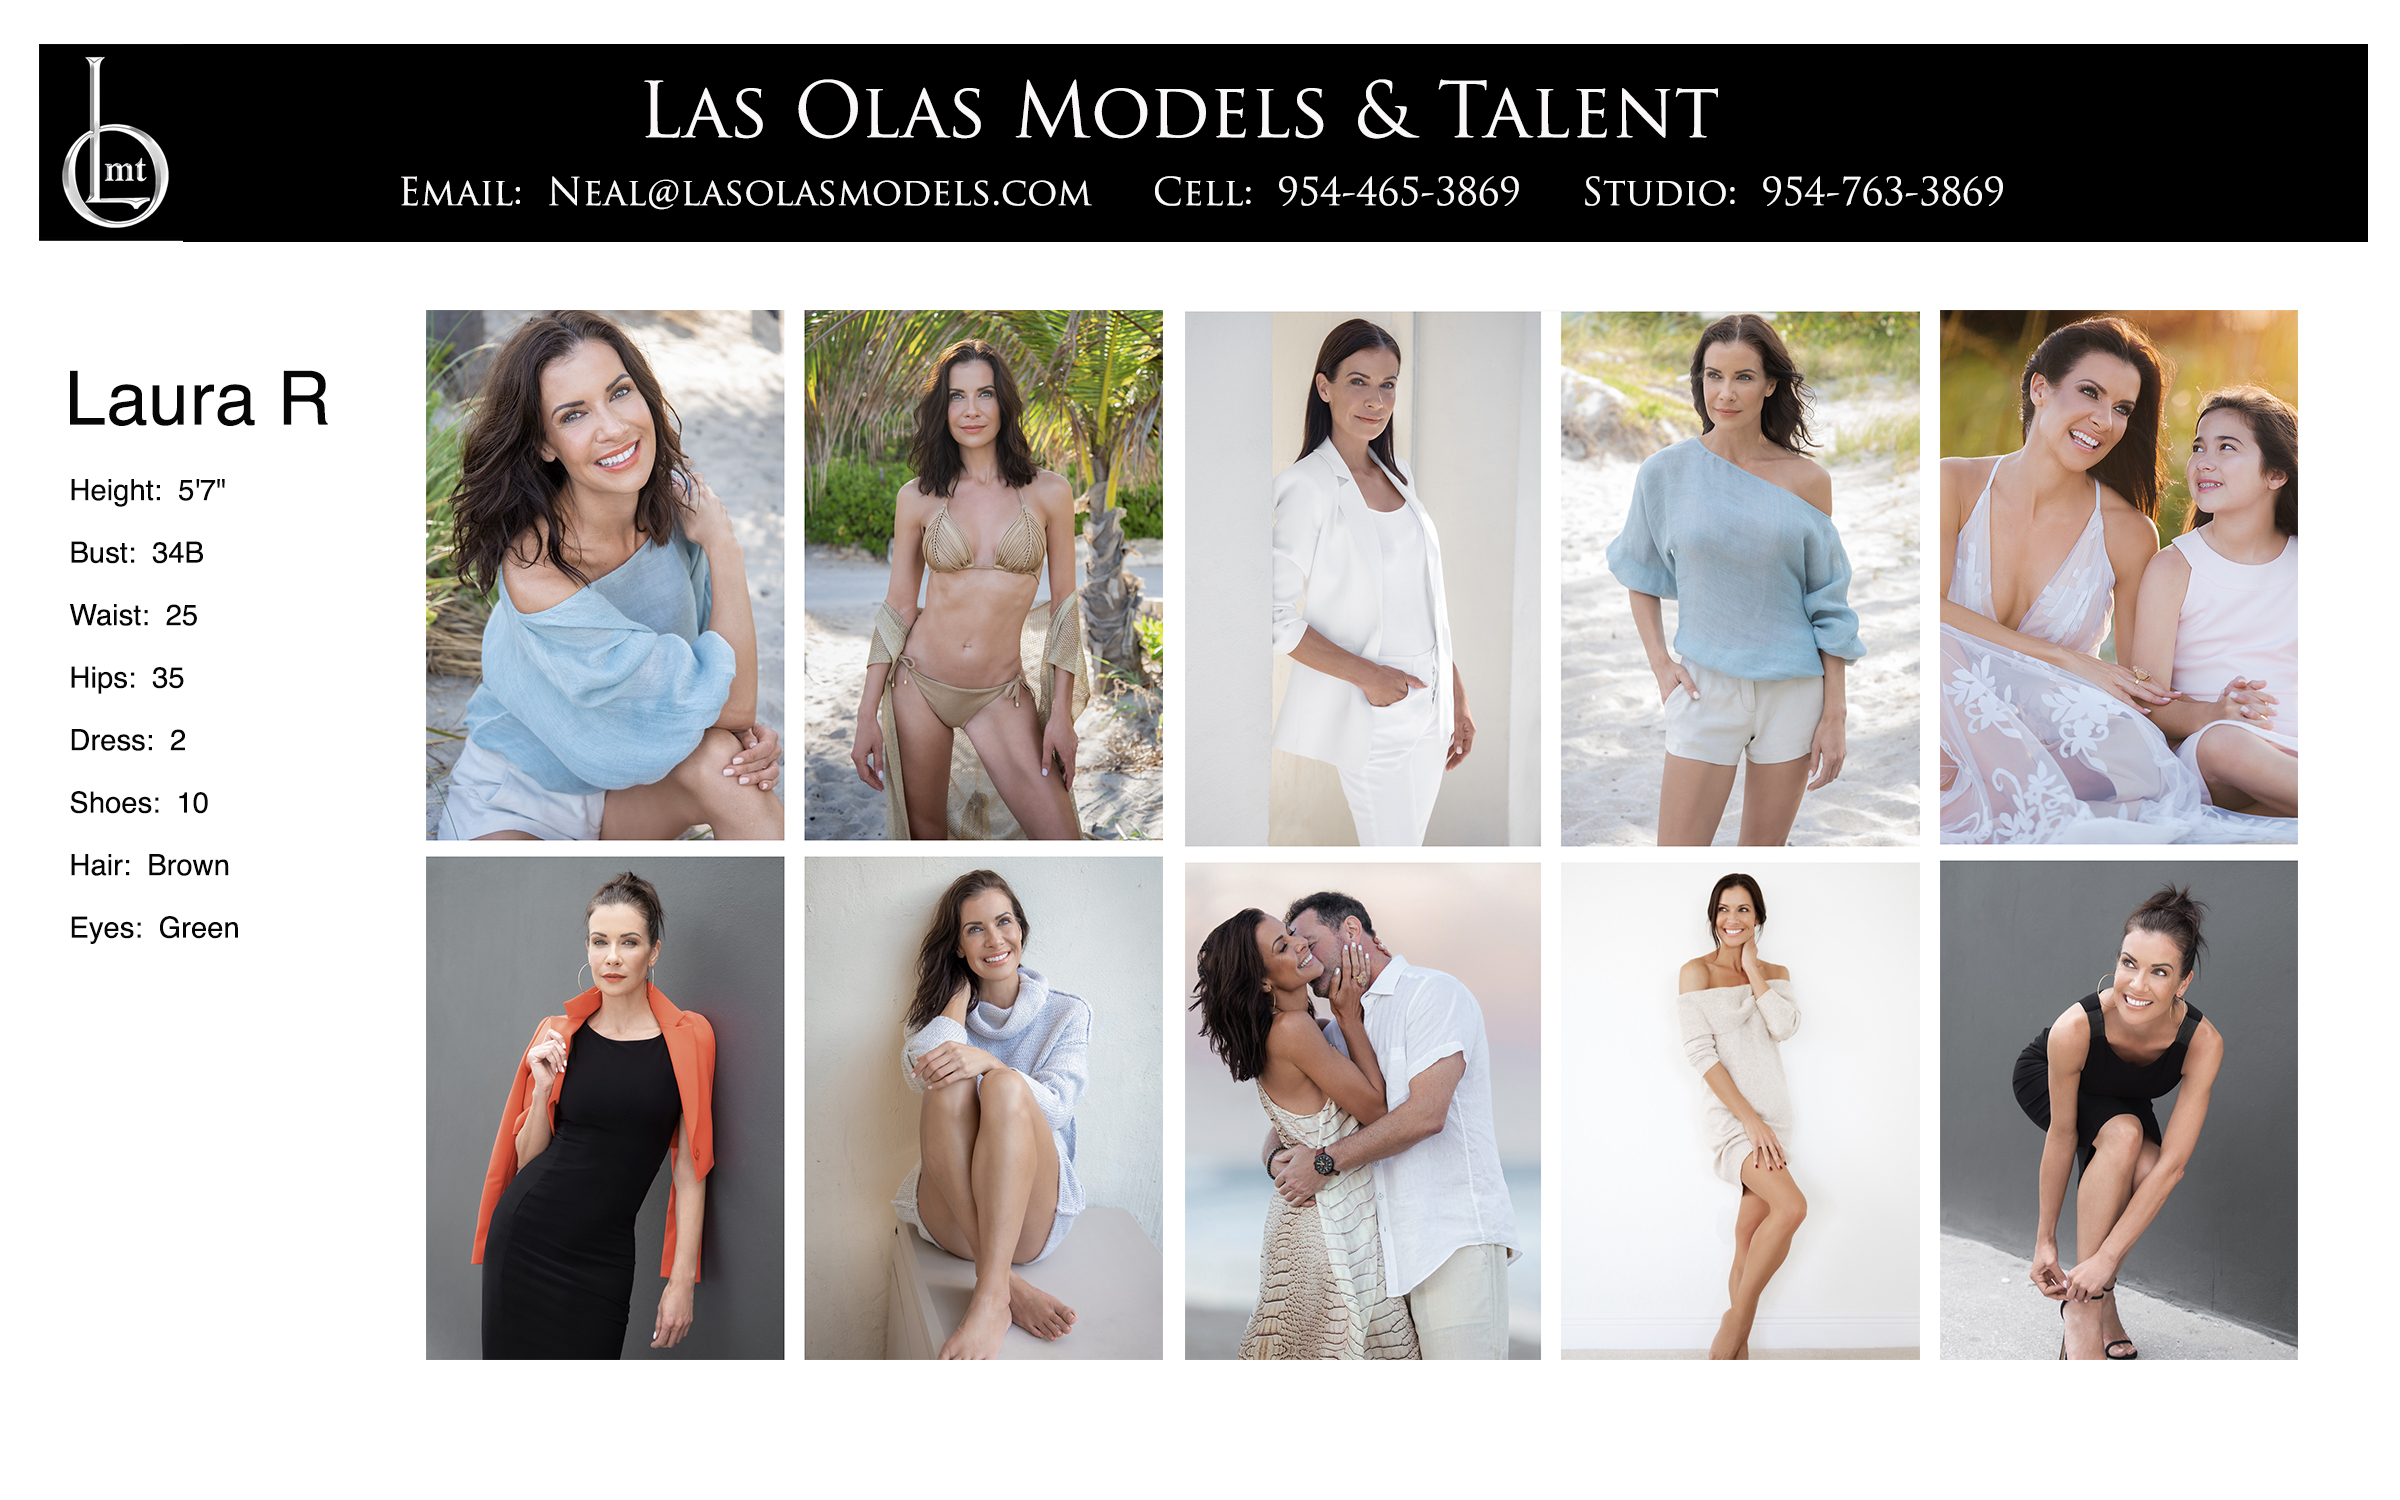 Models Fort Lauderdale Miami South Florida - Print Video Commercial Catalog - Las Olas Models & Talent - Laura R Comp